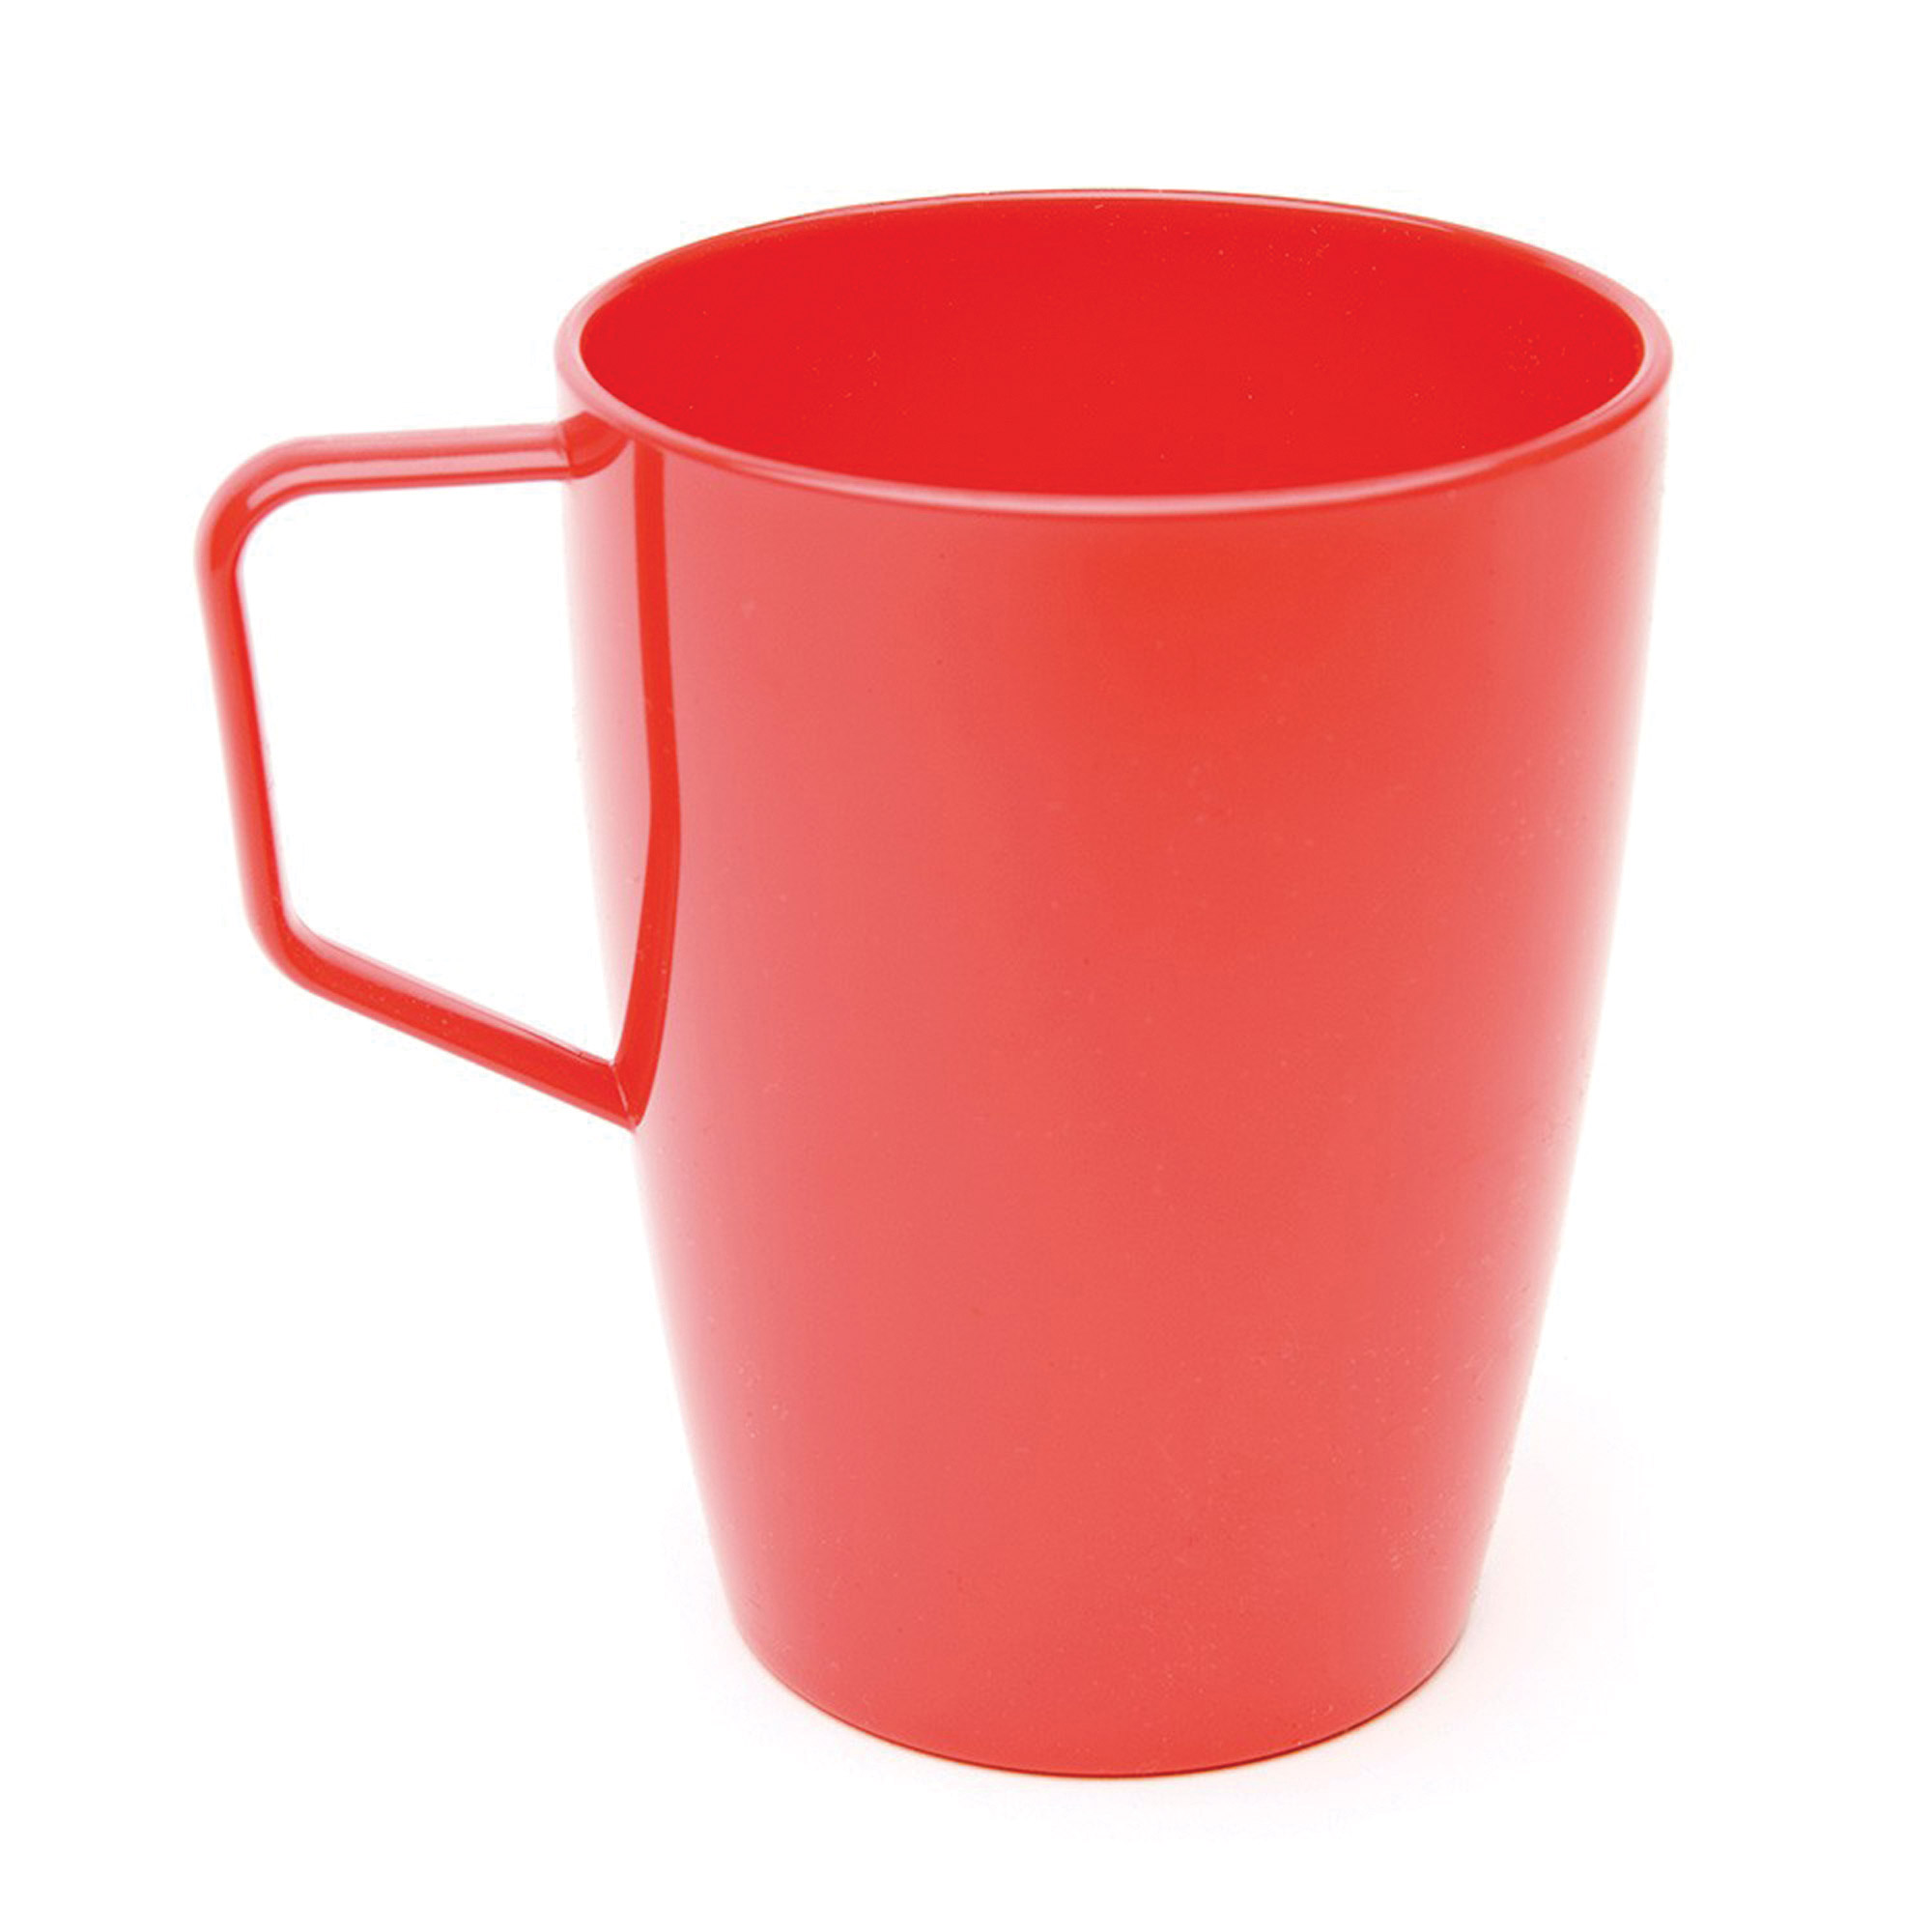 Polycarbonate Mug Red 28cl - Each